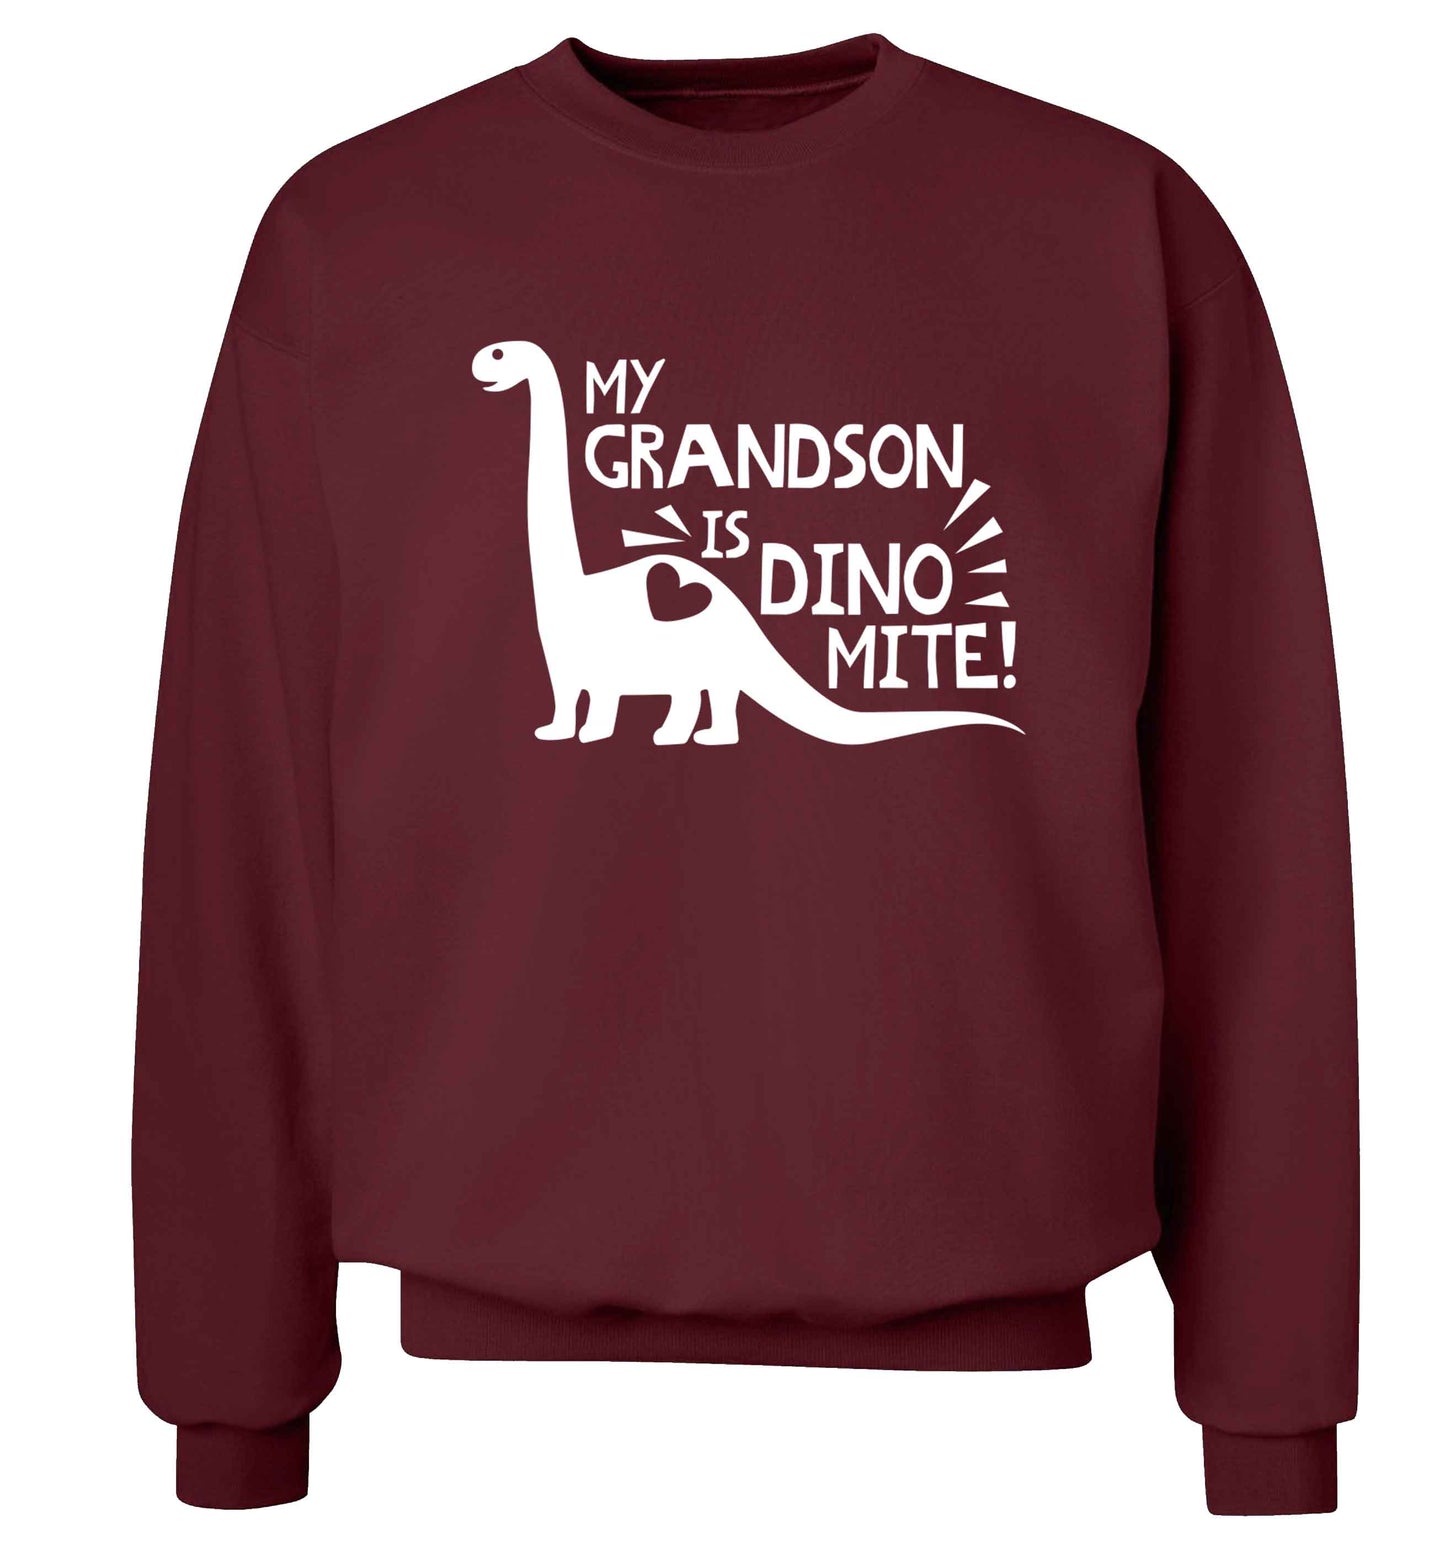 My grandson is dinomite! Adult's unisex maroon Sweater 2XL